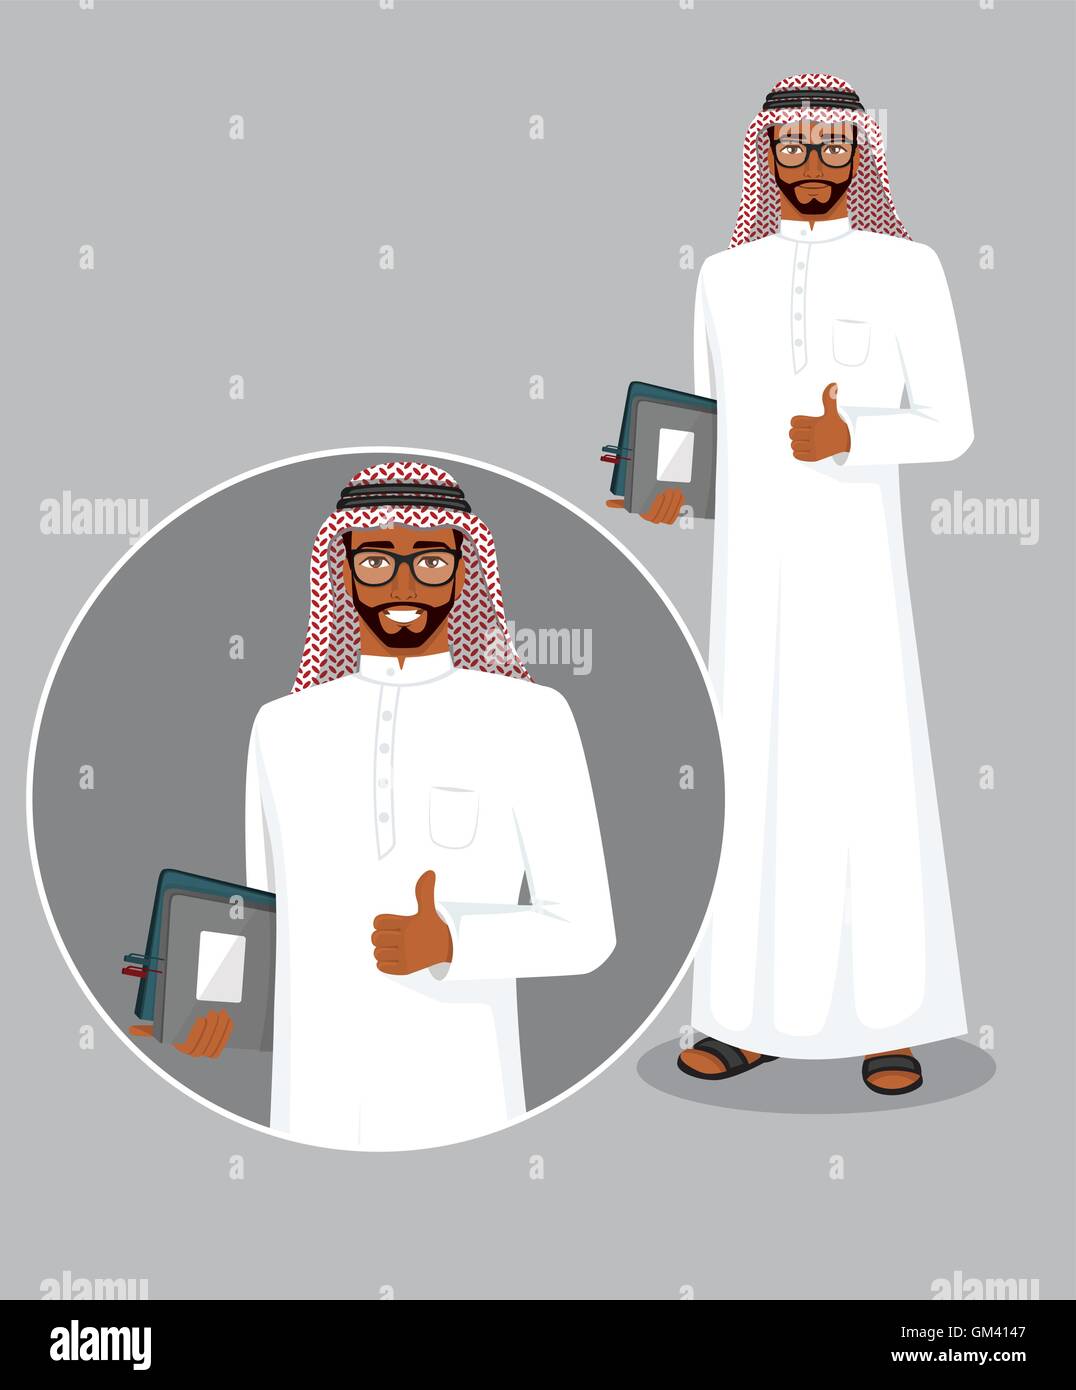 Arabic man character image Stock Vector